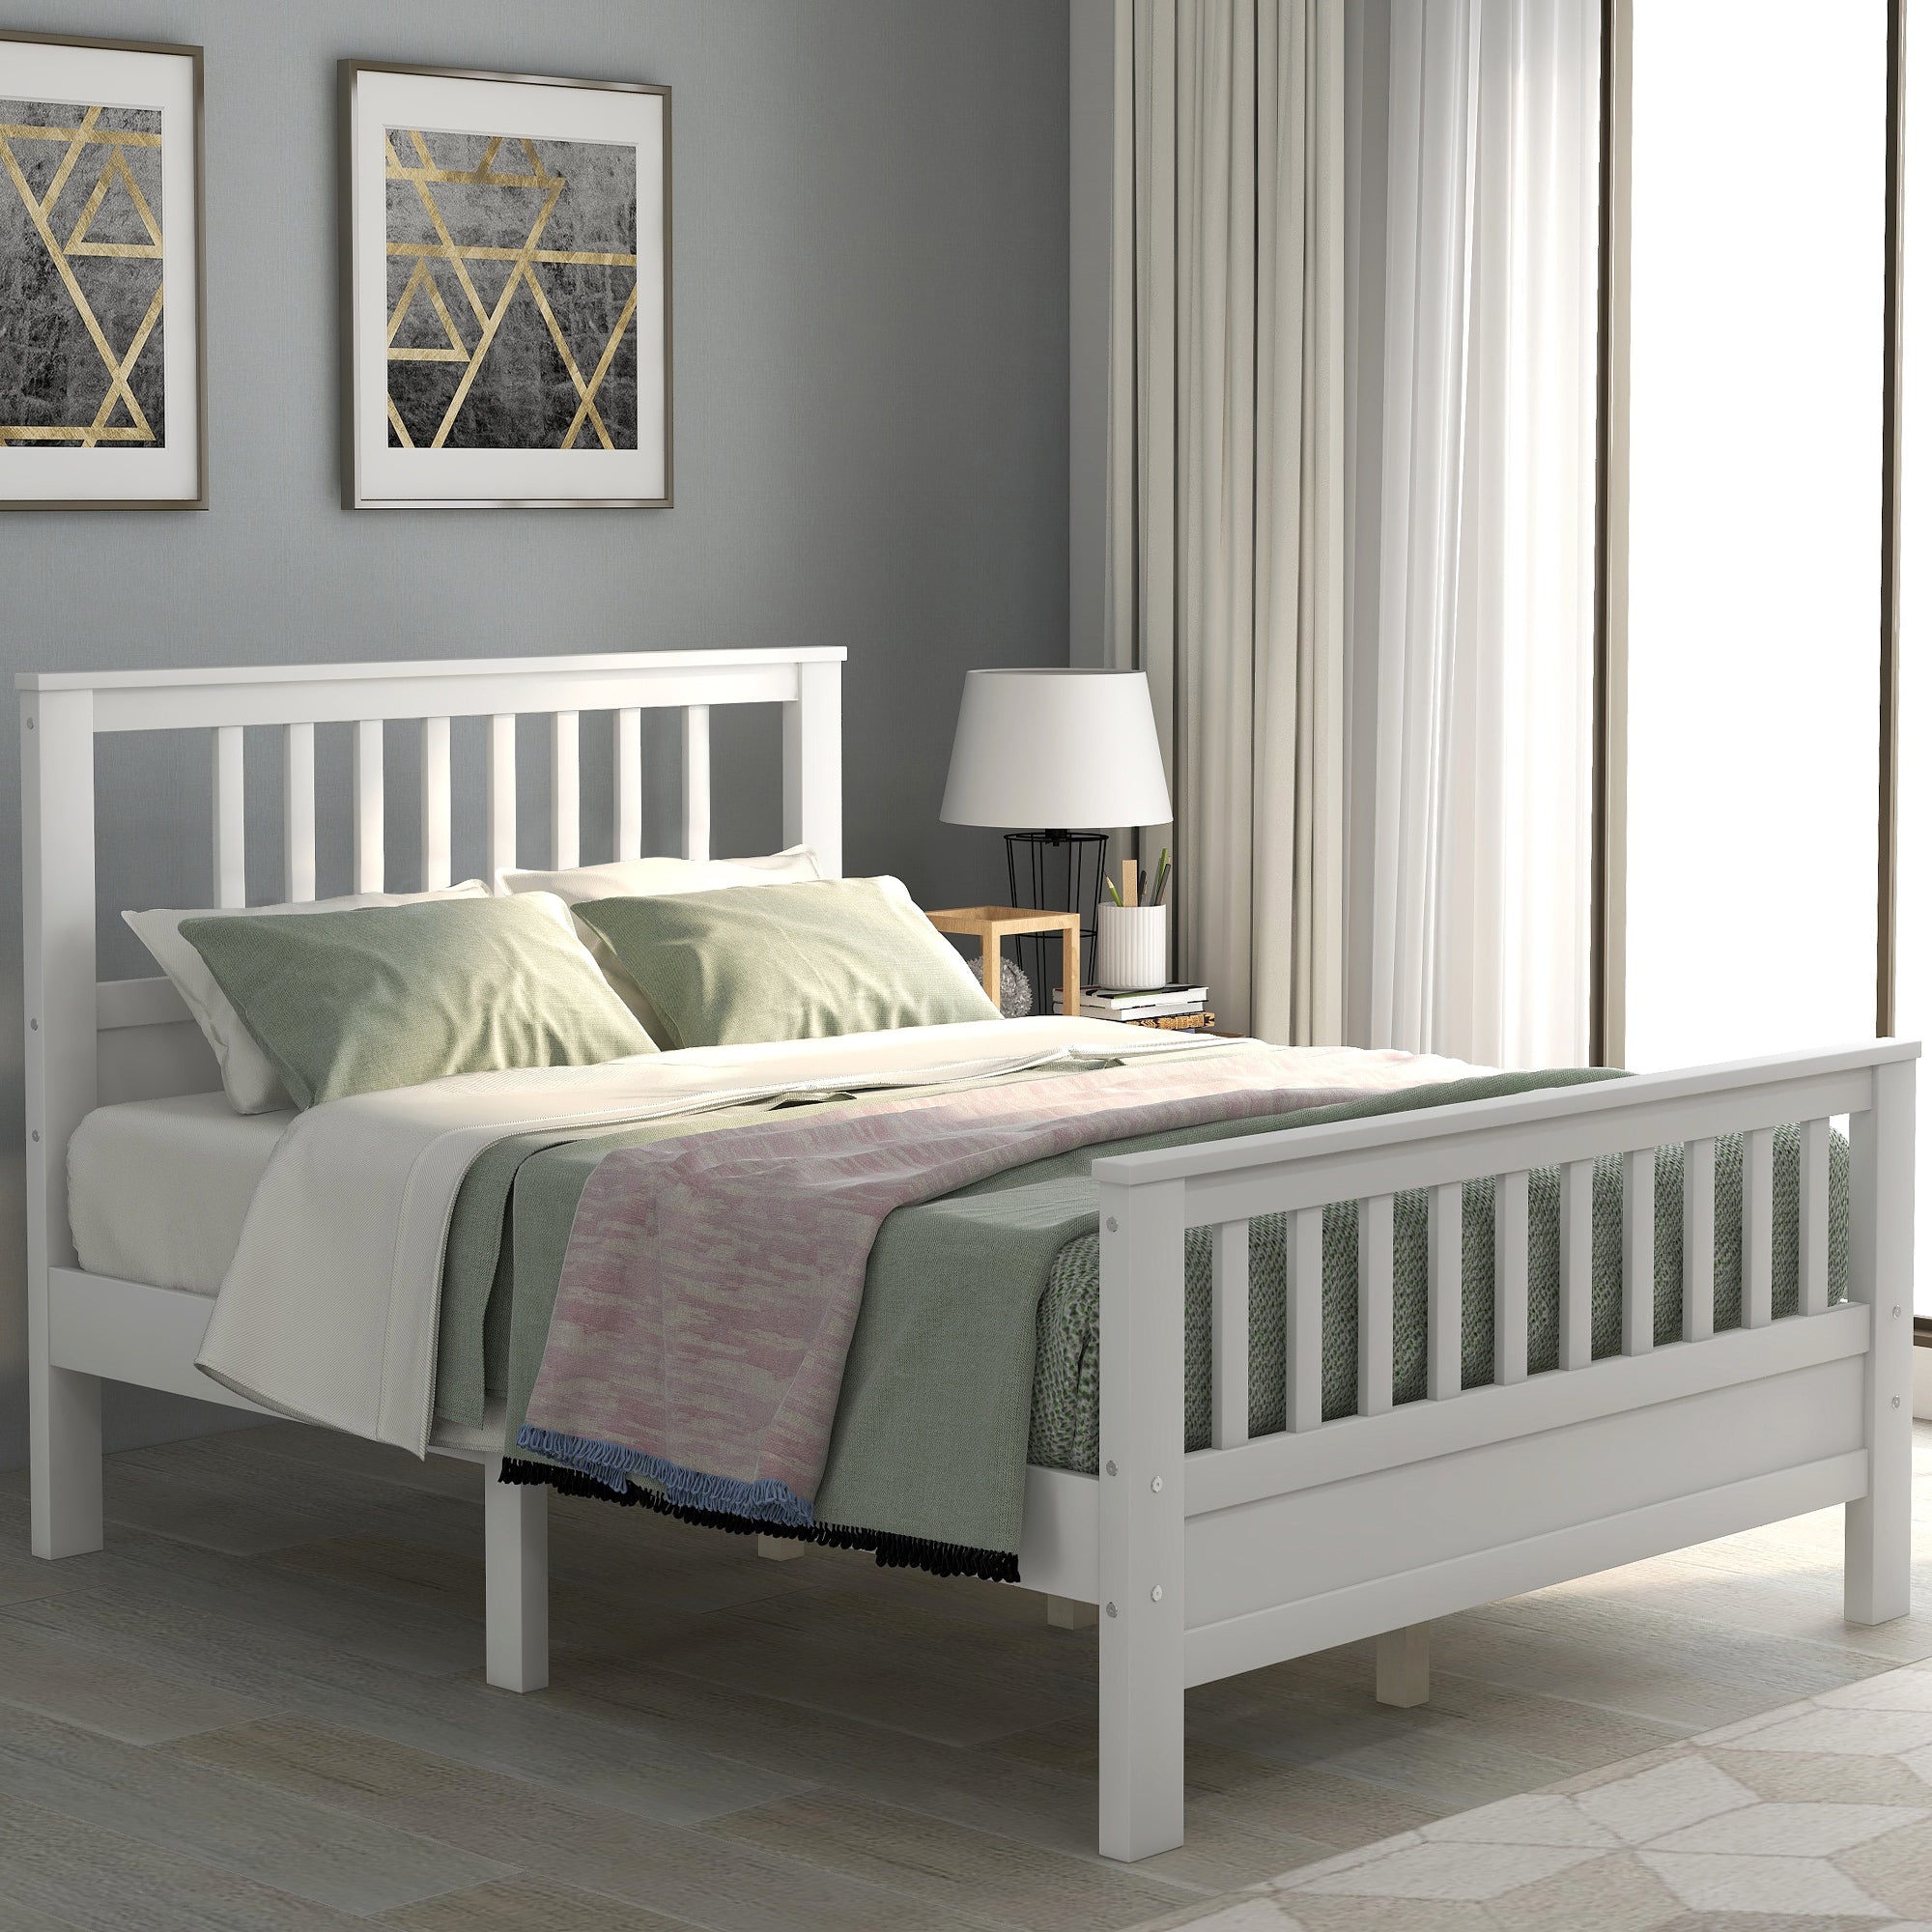 Full White Wood Platform Bed - Headboard & Footboard Included - Sturdy & Stylish Bedroom Furniture